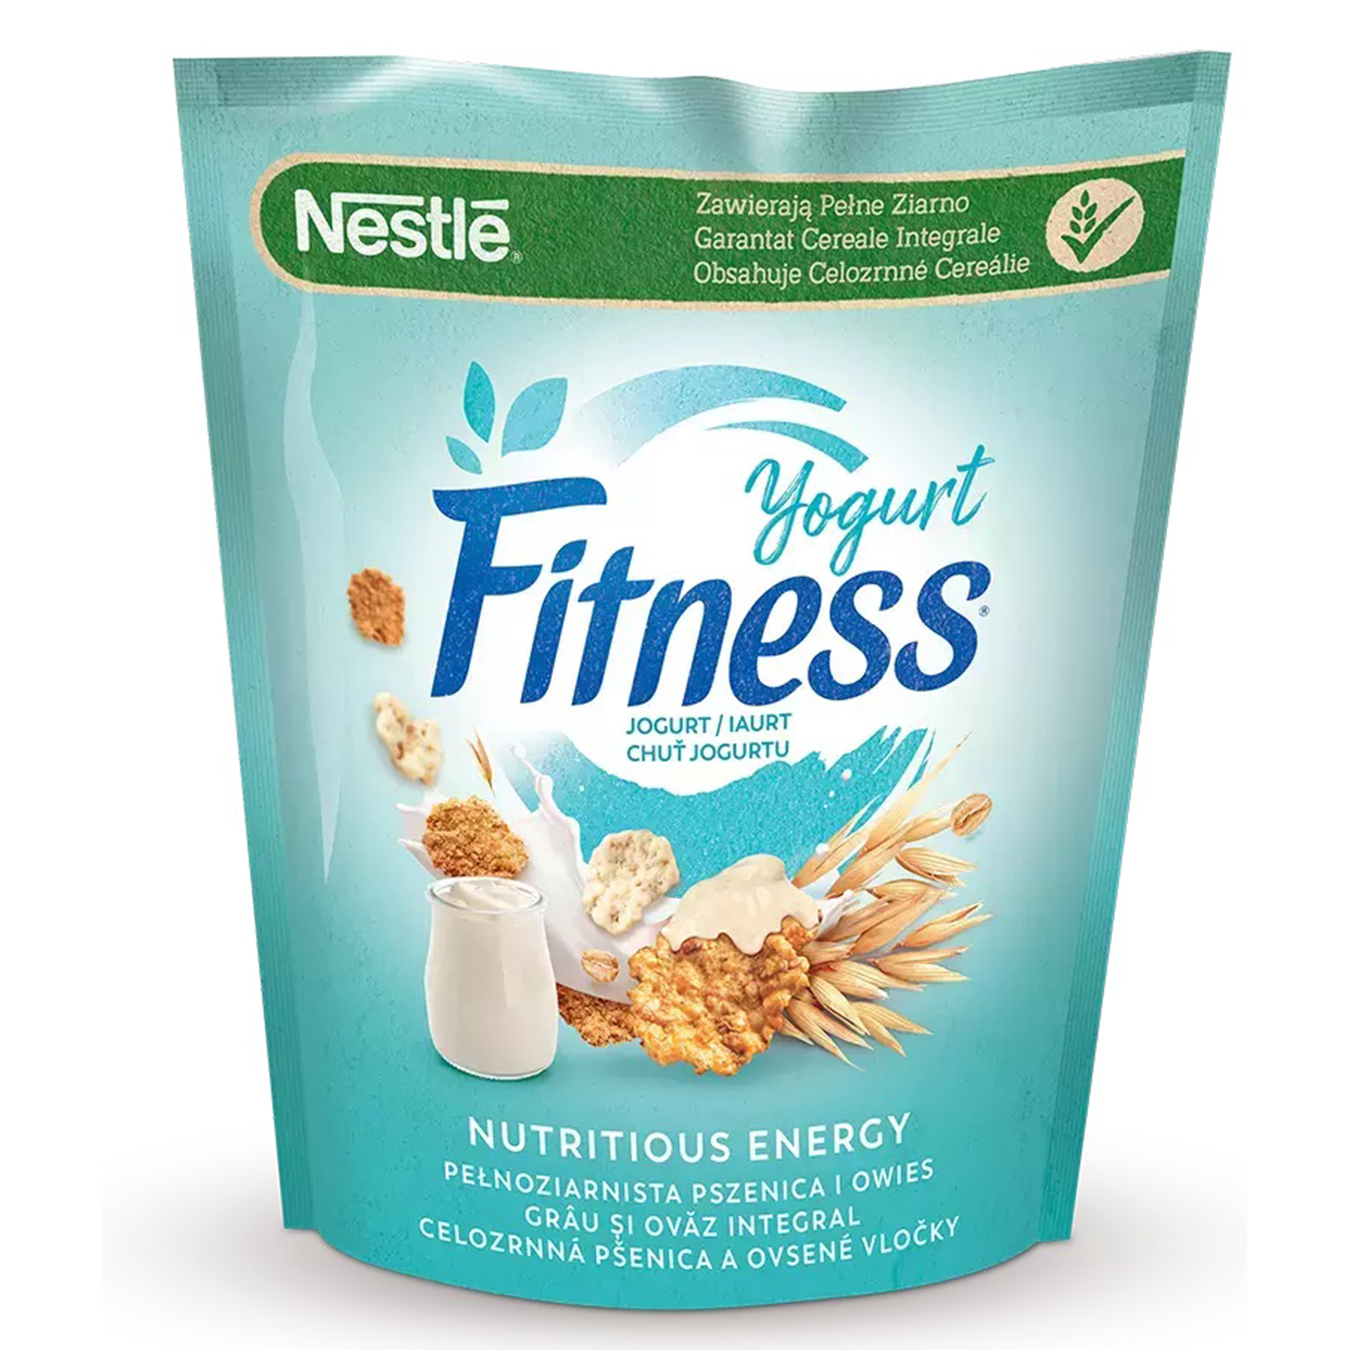 Сніданок готовий Nestle FITNESS йогурт 225г